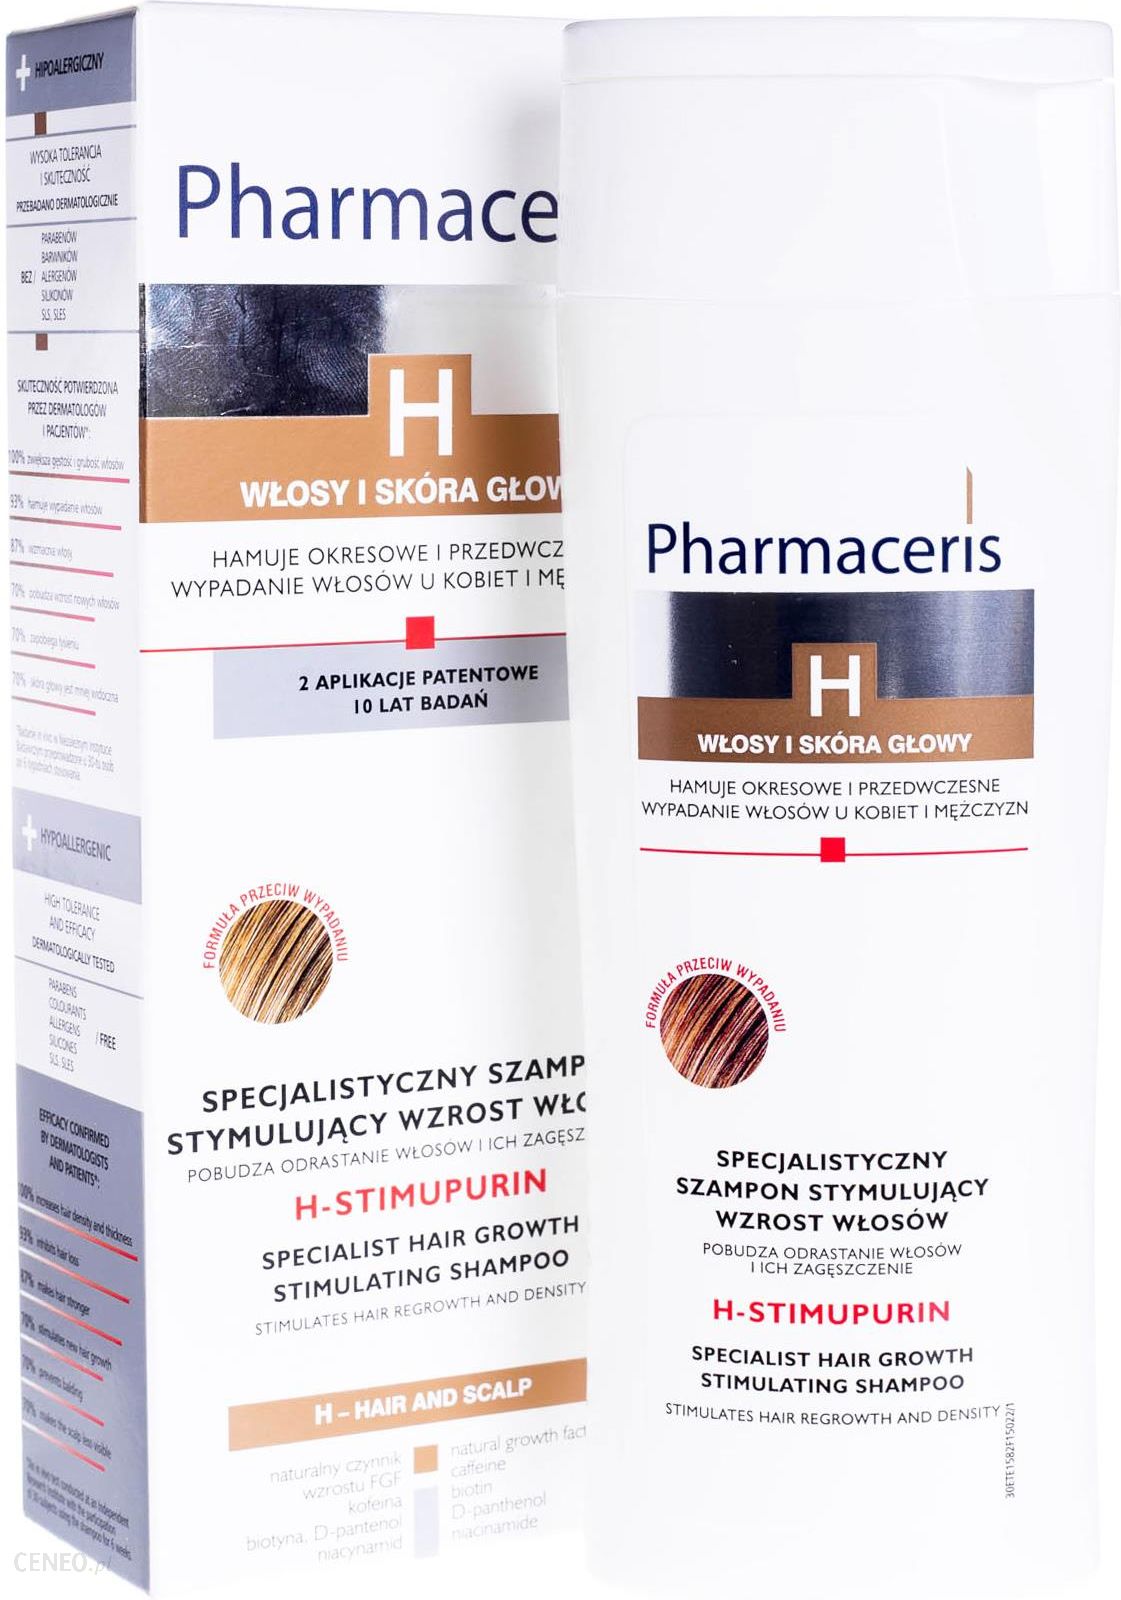 pharmaceris h stimupurin szampon ceneo